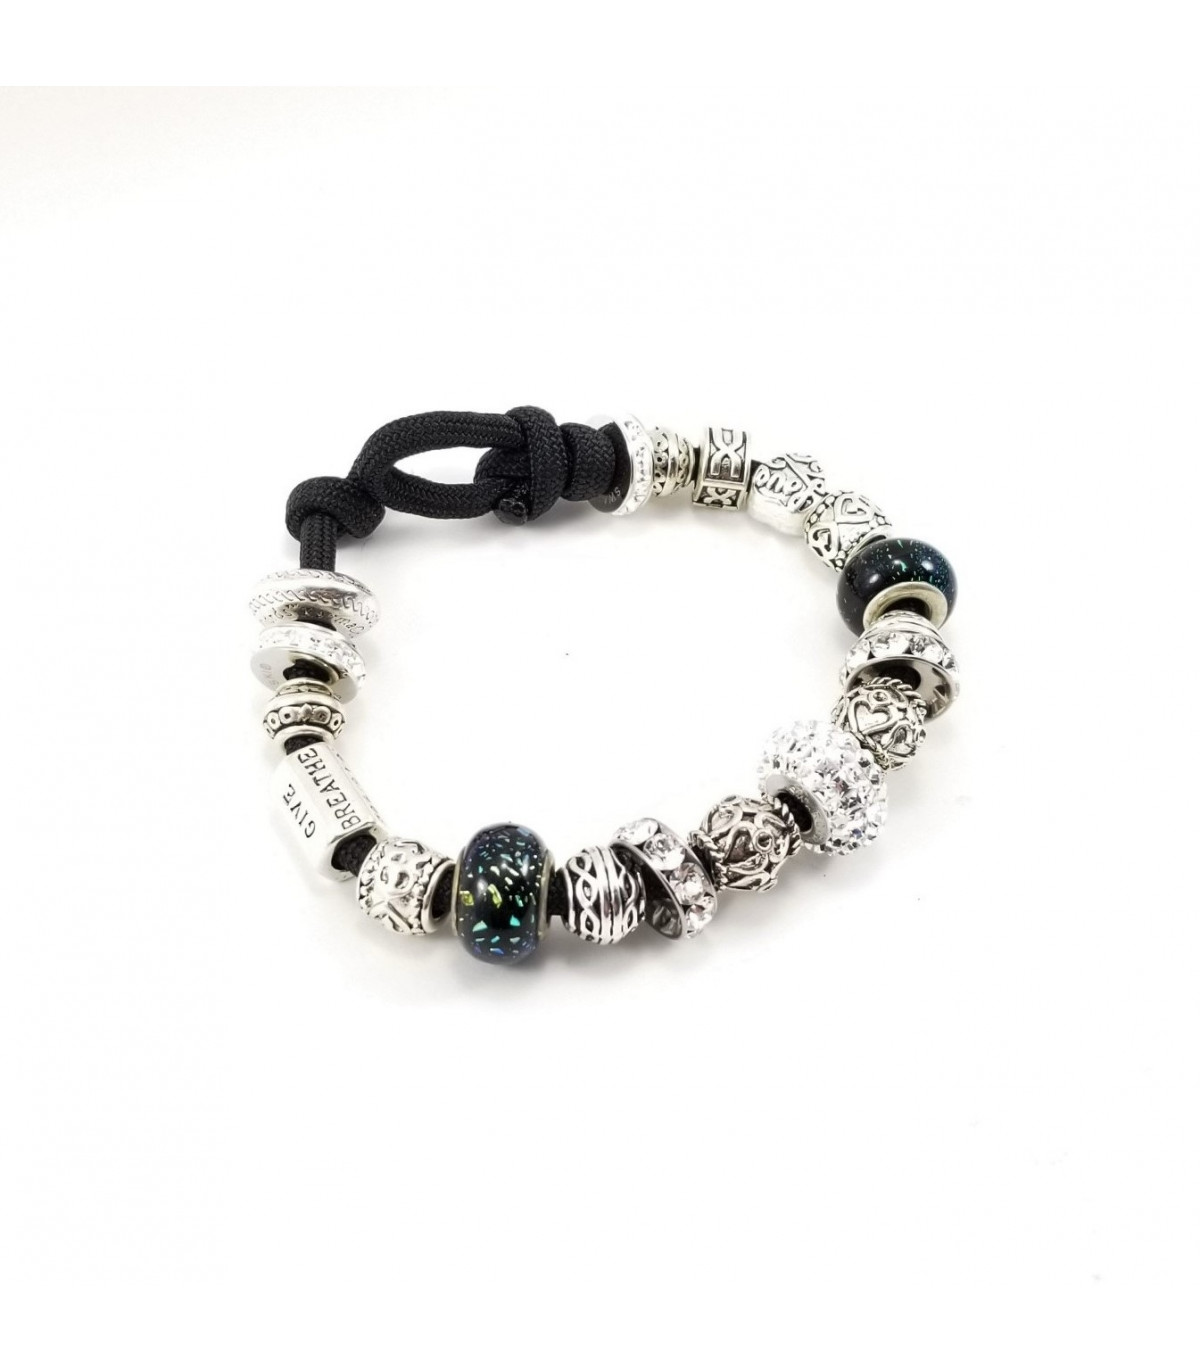 Addition shaver pick up Women's Clear Swarovski Crystals Beads on Black Charm Bracelet